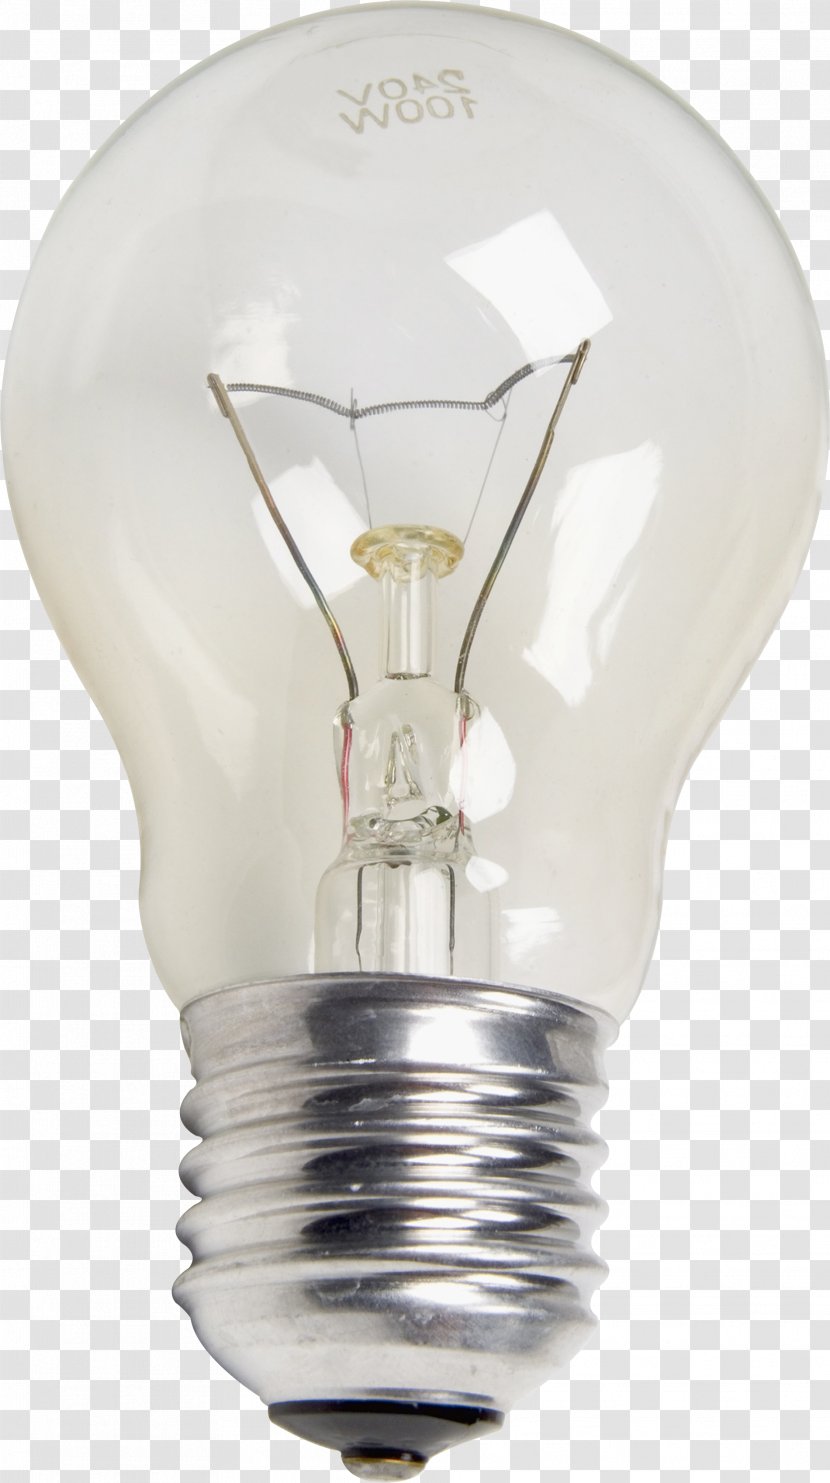 Incandescent Light Bulb Lamp Lighting Clip Art - Compact Fluorescent - Image Transparent PNG